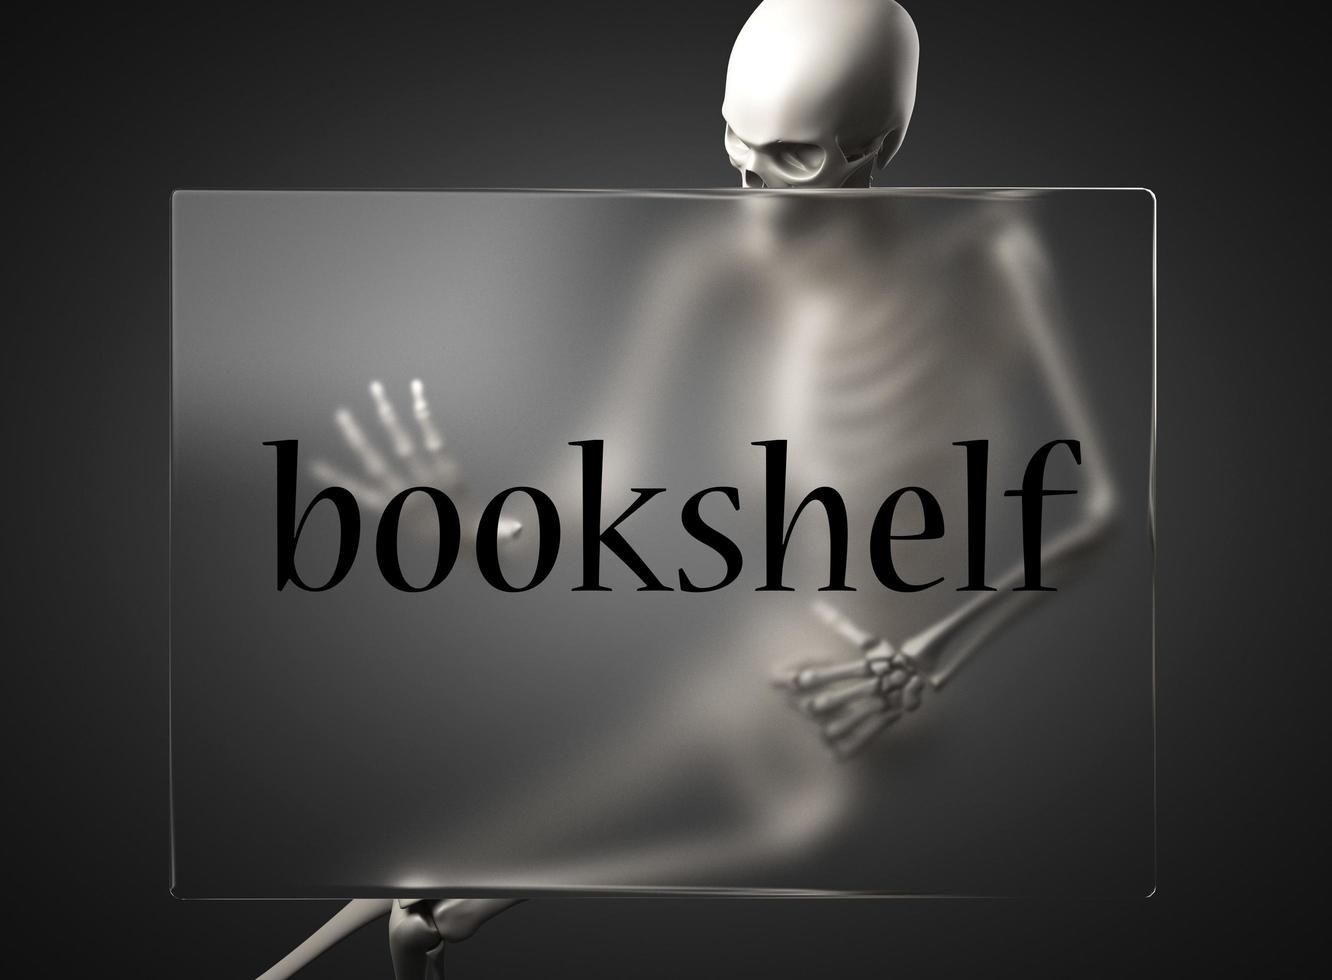 bookshelf word on glass and skeleton photo